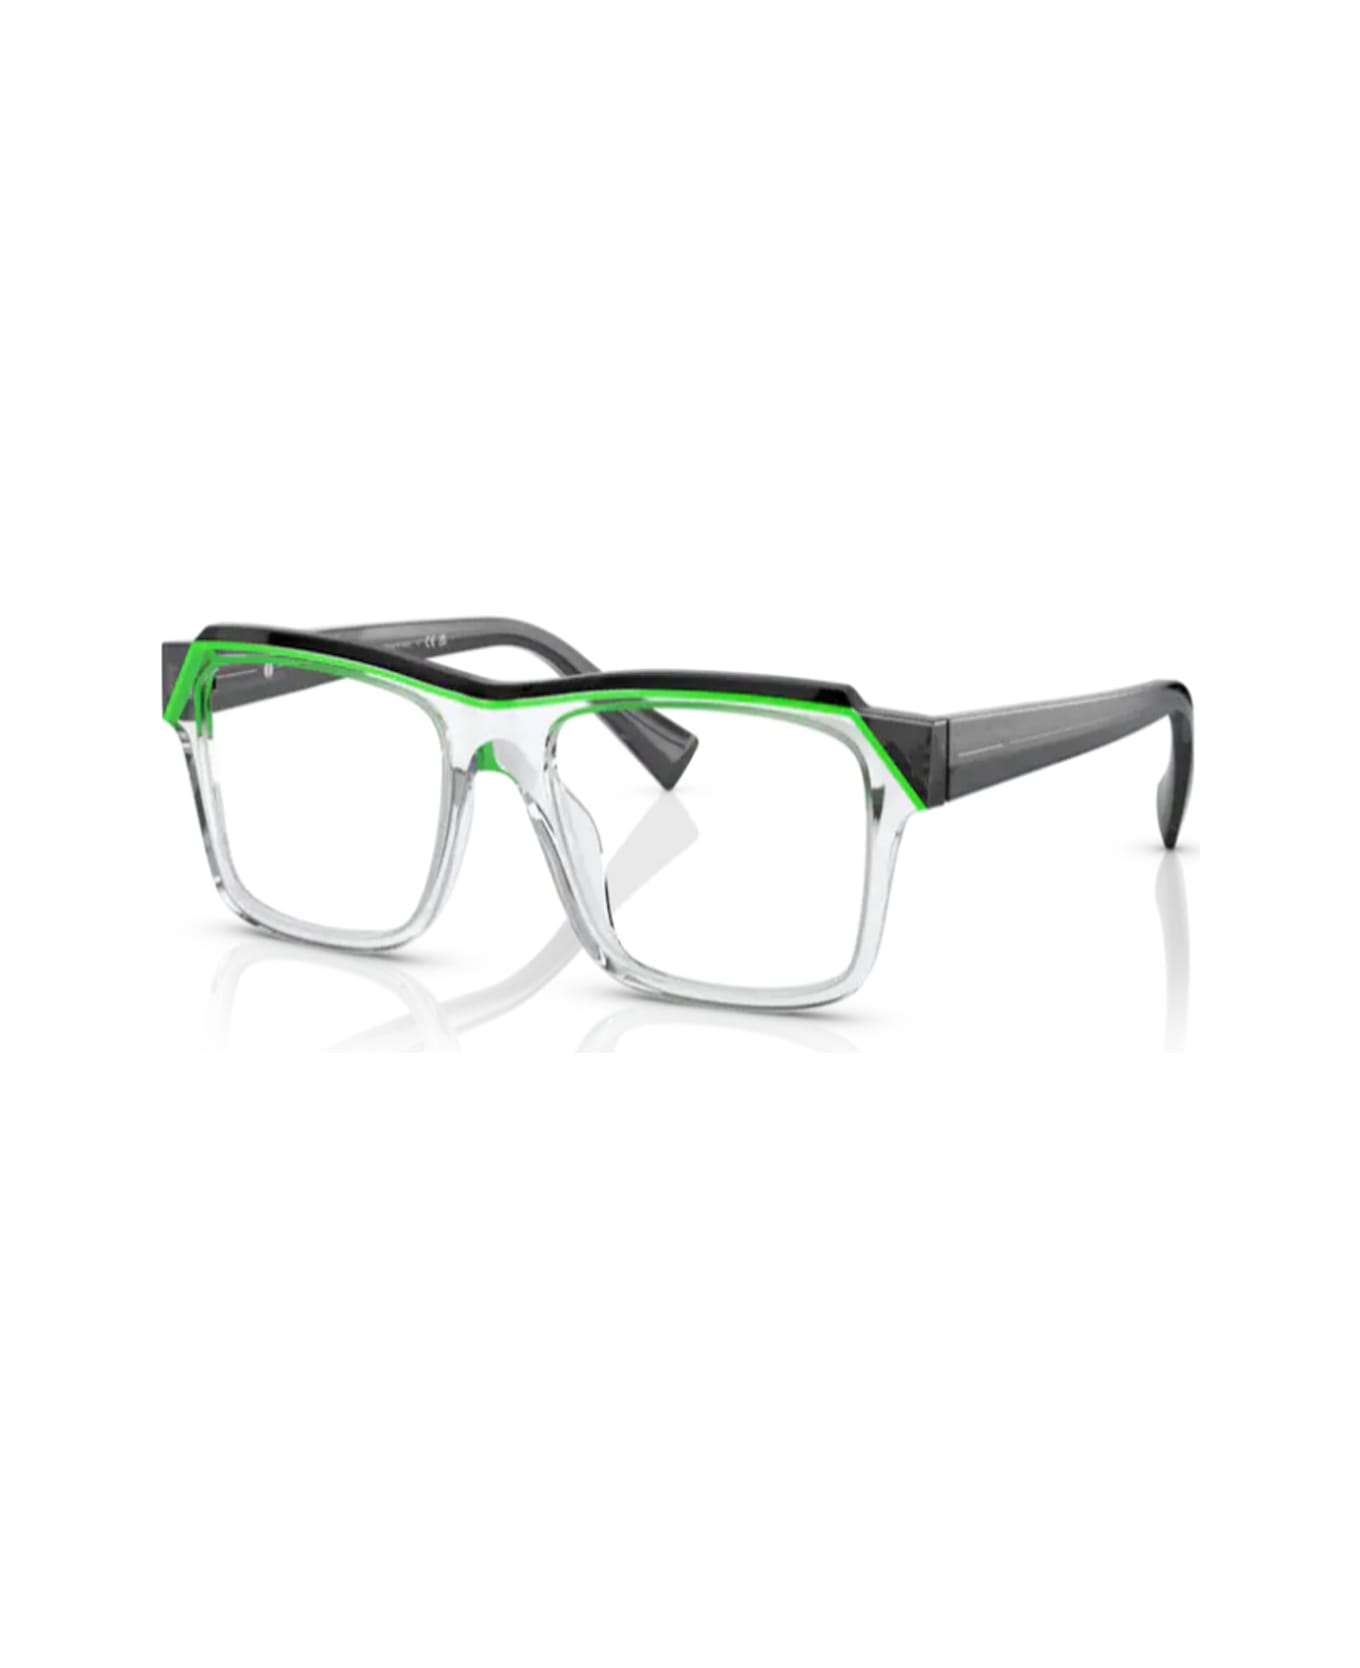 Alain Mikli A03150 Glasses - Verde